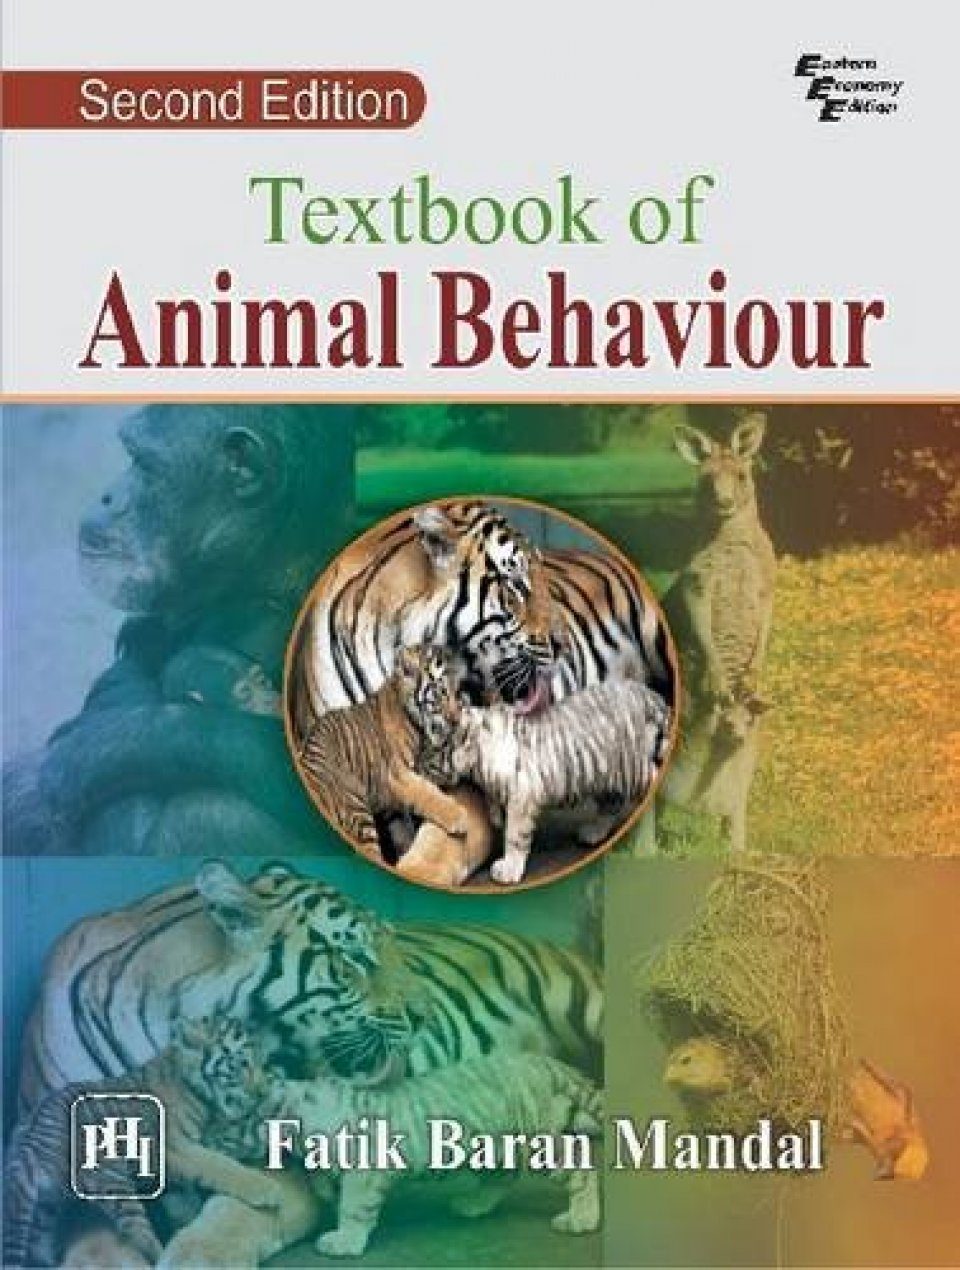 Textbook of Animal Behaviour | NHBS Academic & Professional Books